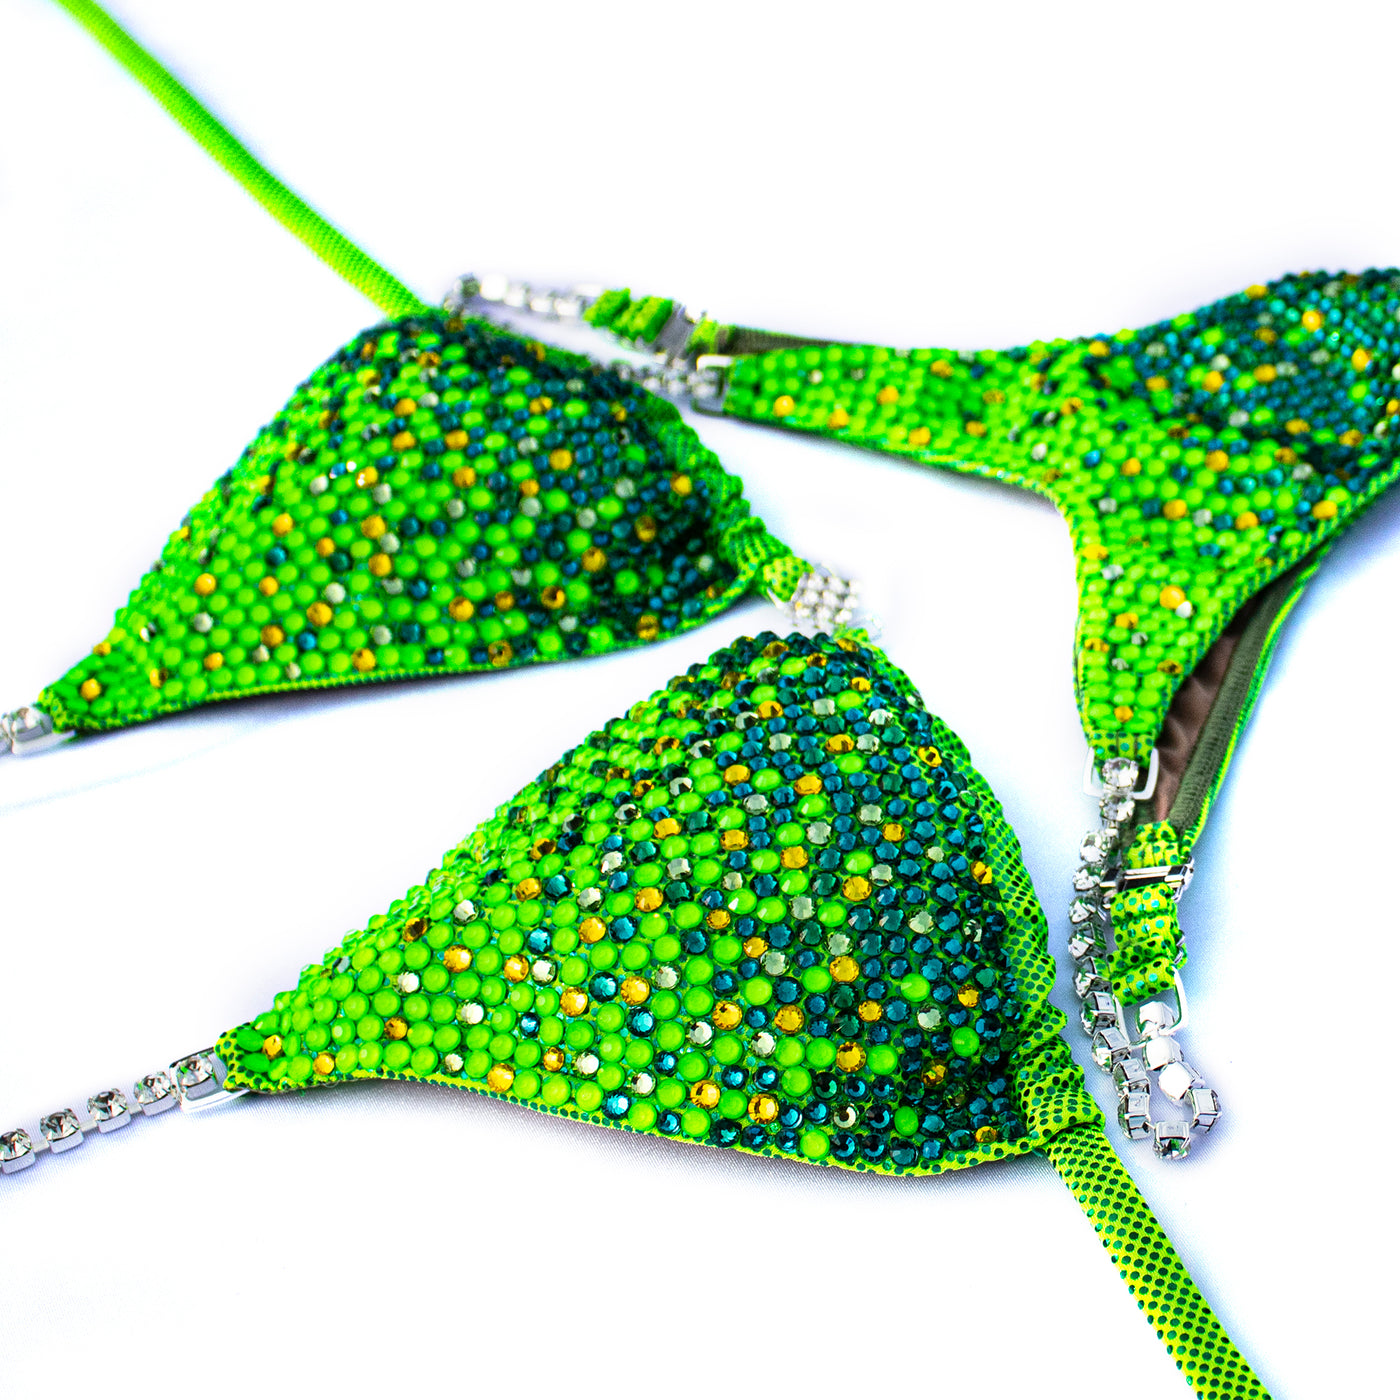 Neon Green Gradient Competition Bikini | OMG Bikinis